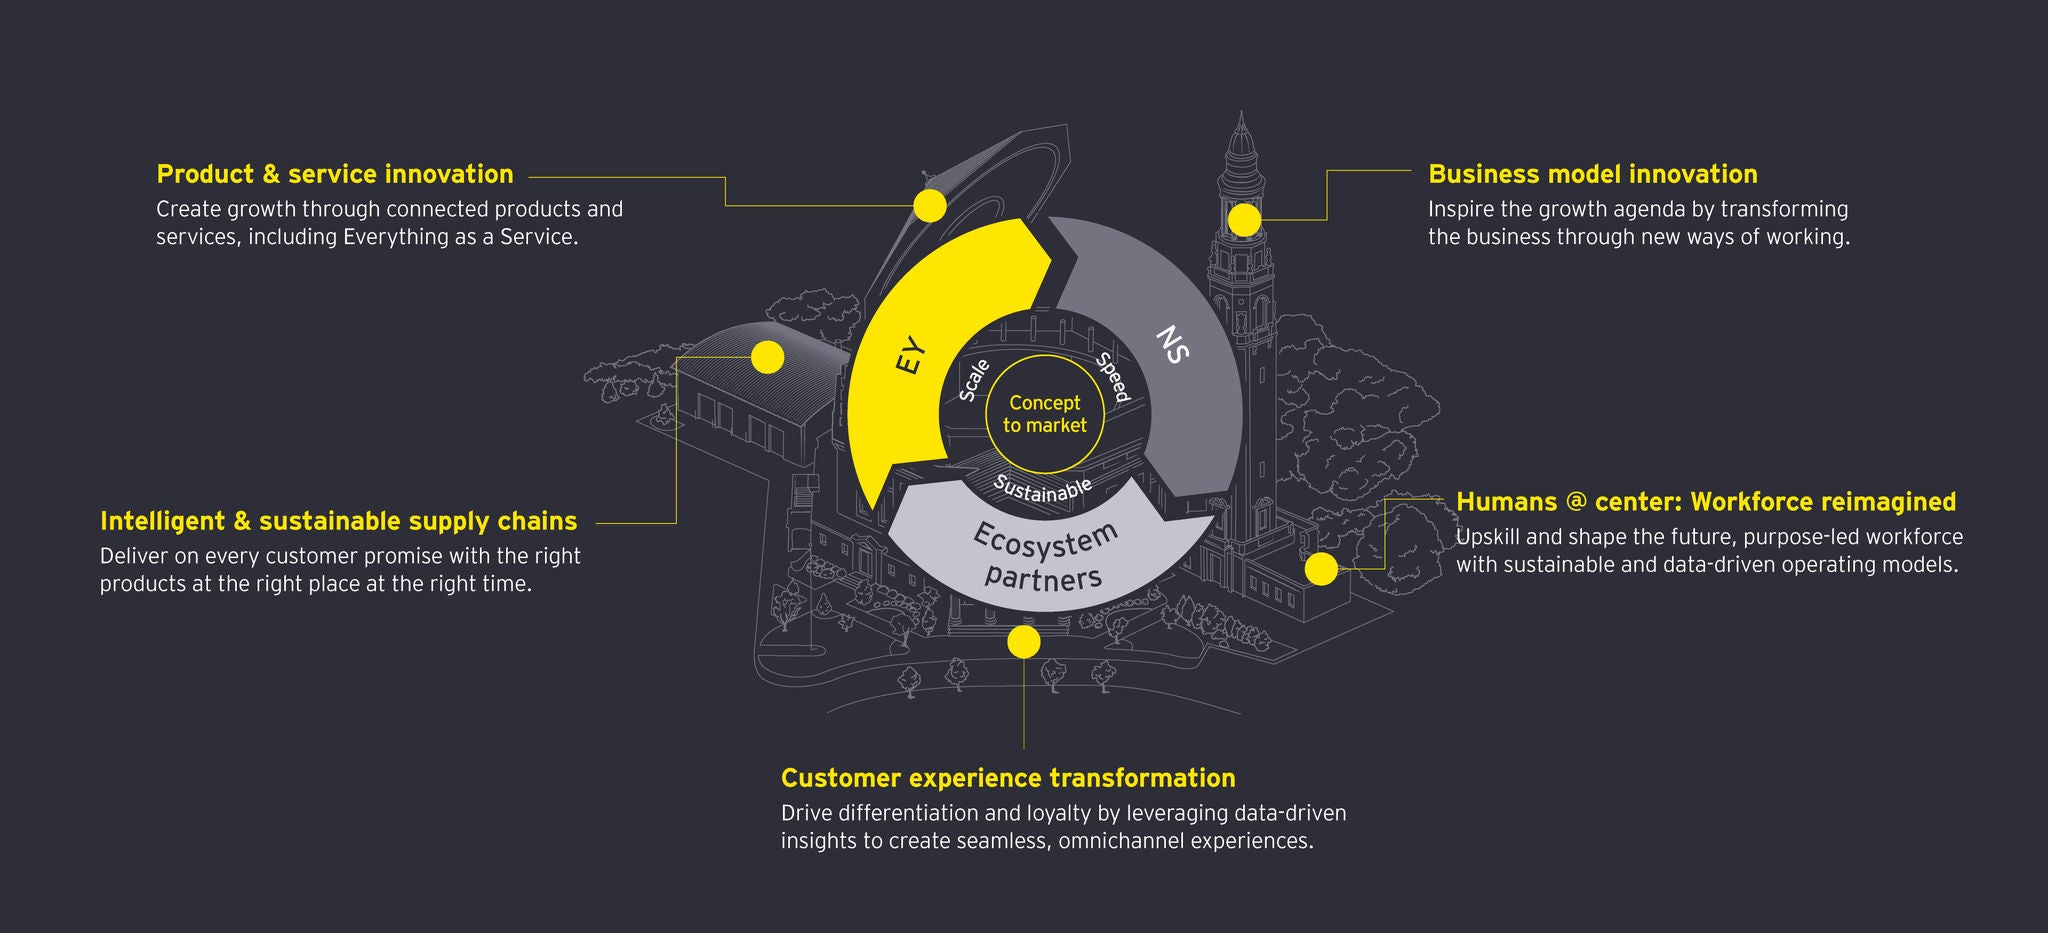 Customer Experience & Employee Experience Transformation: Nordics